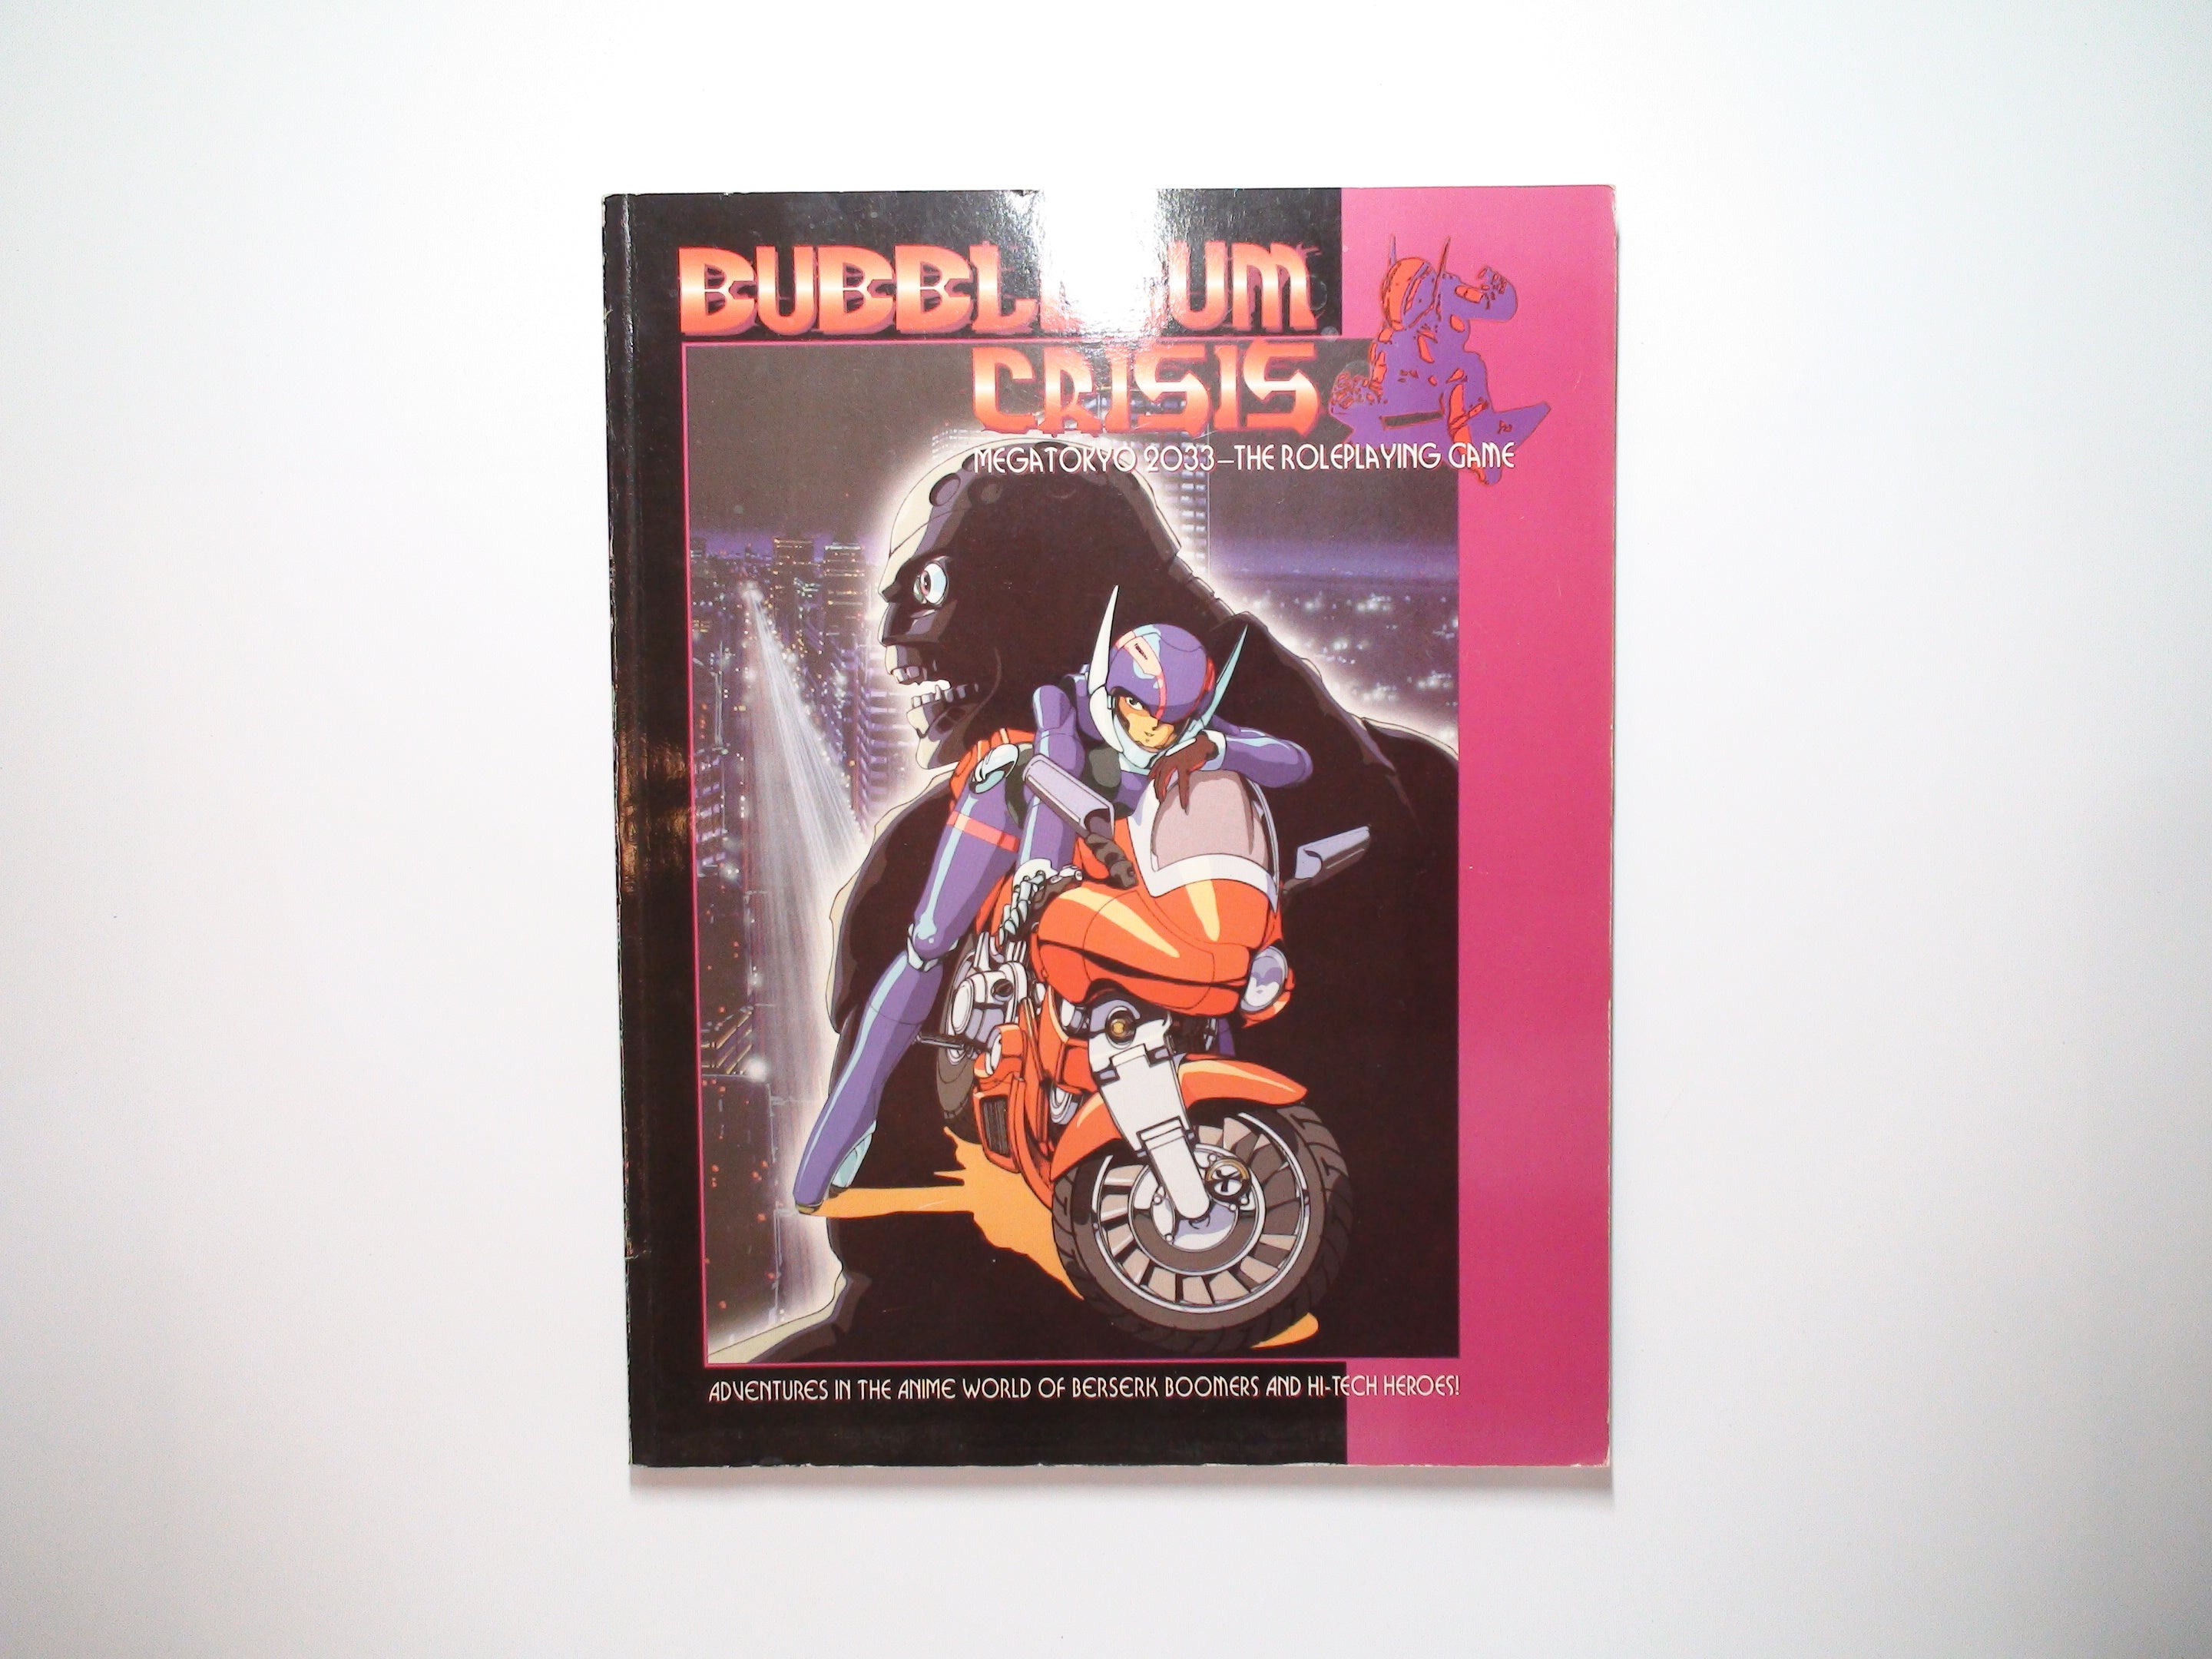 Bubblegum Crisis, MegaTokyo 2033, The Roleplaying Game, 1st Ed, BG8001, 1996